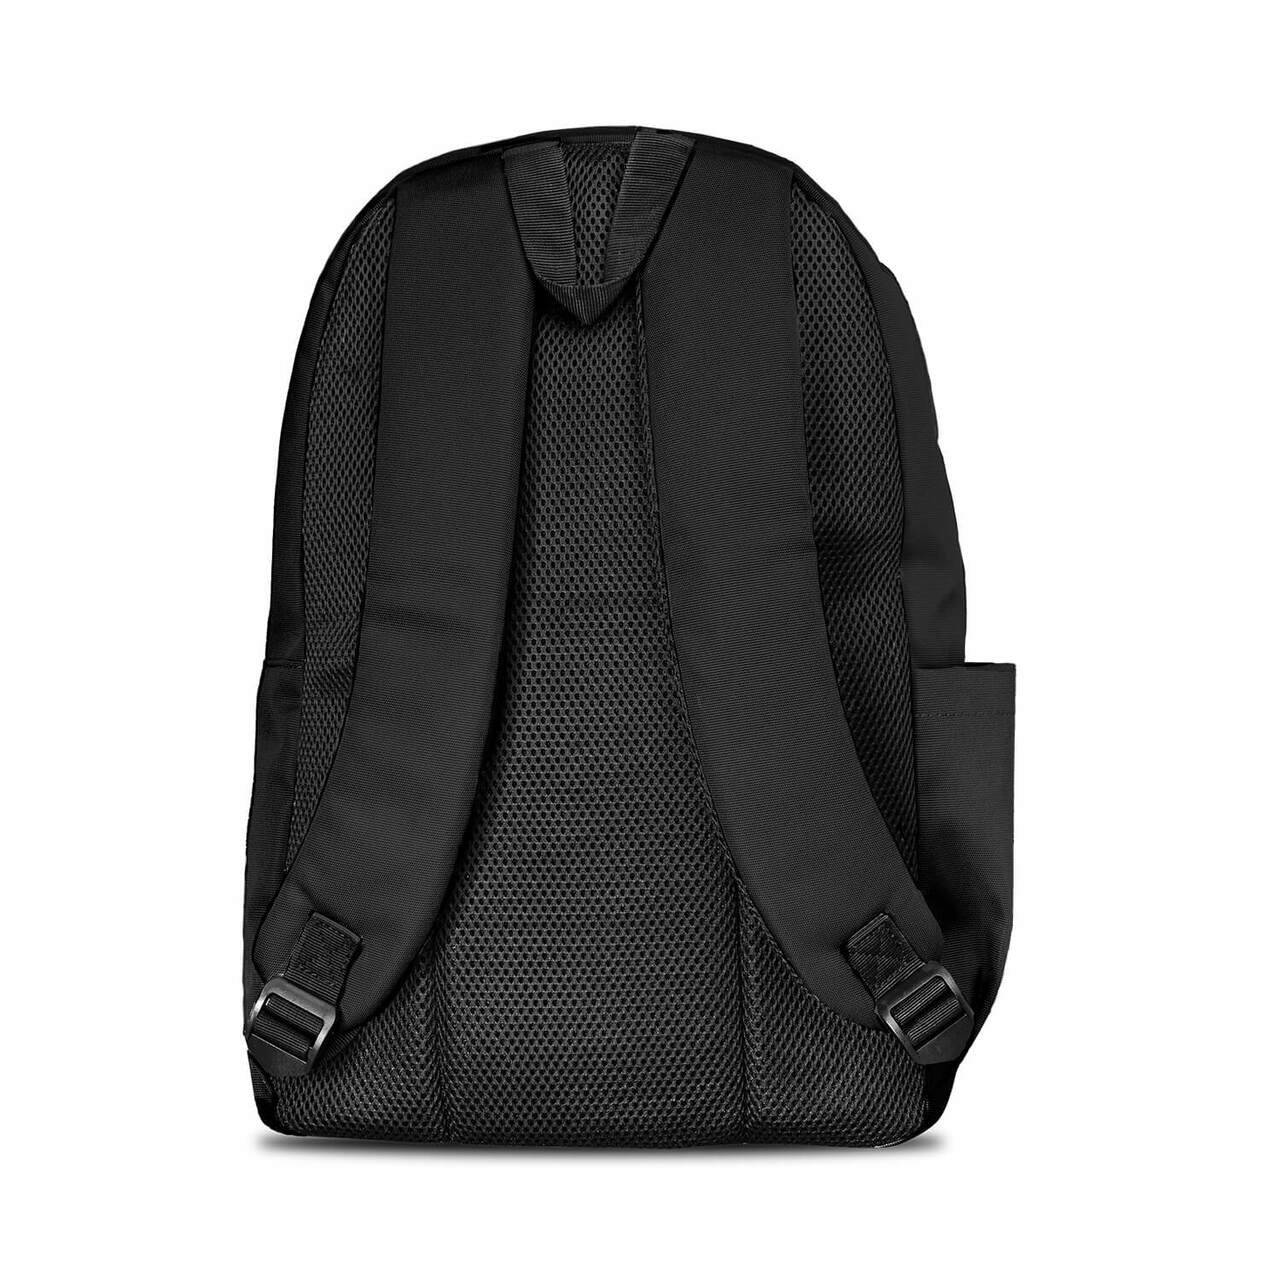 New York Rangers Campus Laptop Backpack- Black